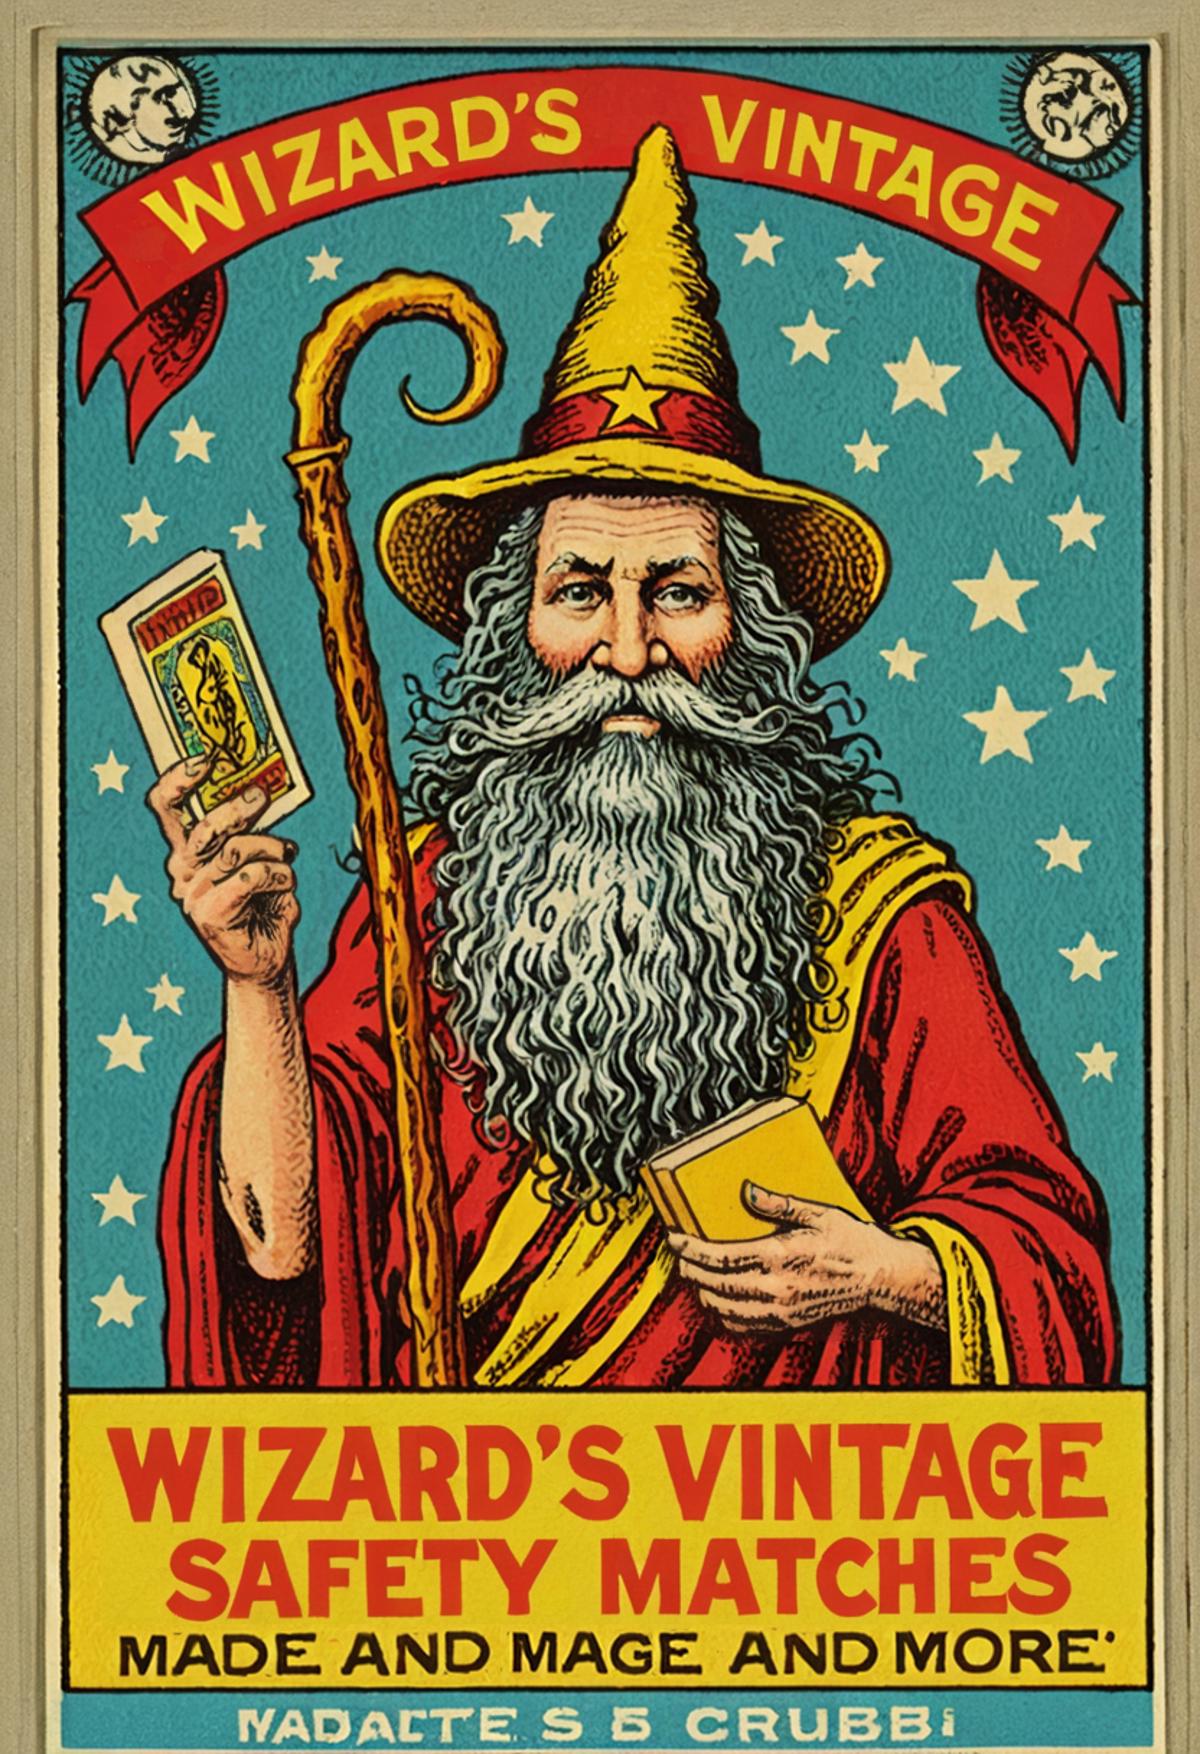 Wizard's Vintage Matchbox image by WizardWhitebeard